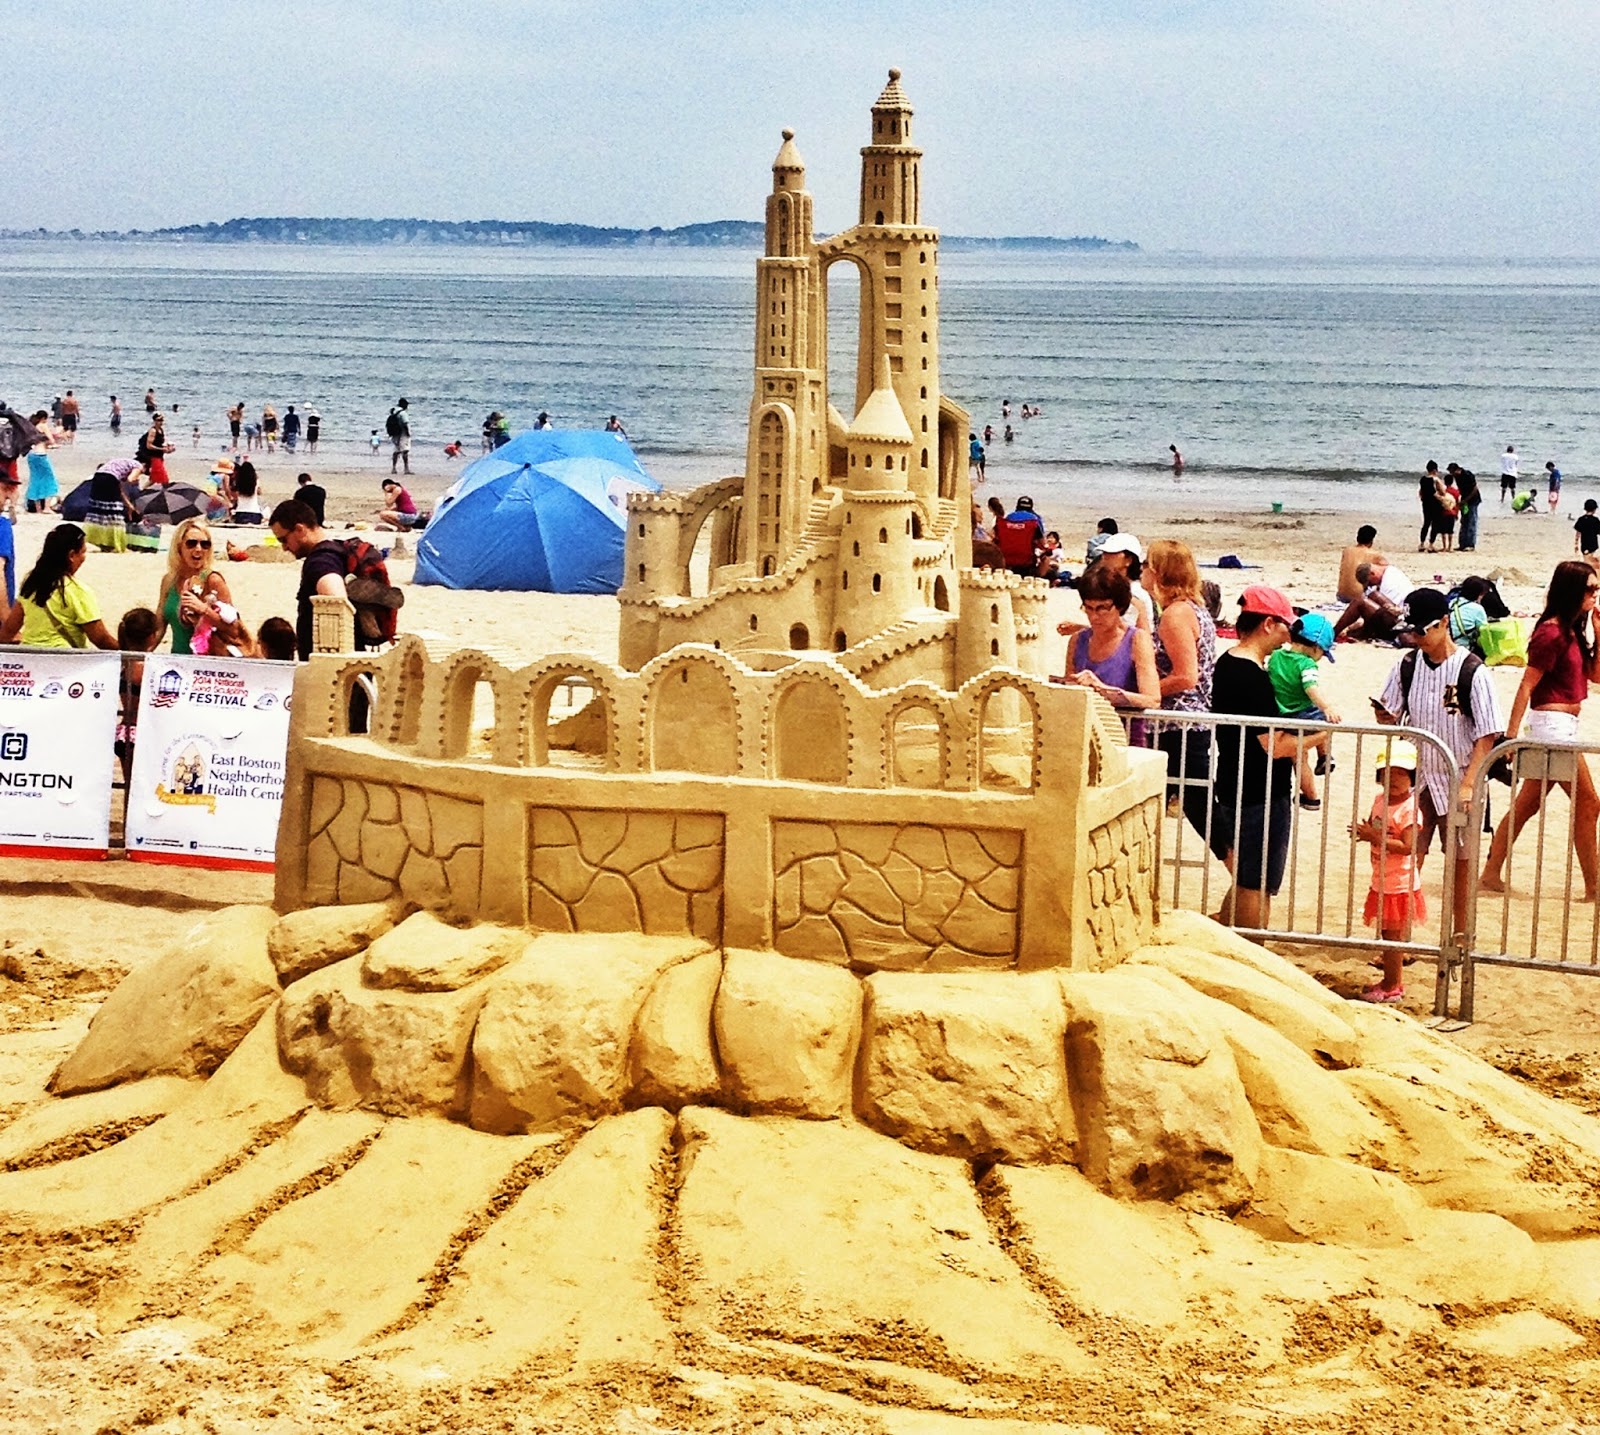 Revere Beach Sand Castle Festival - Chow Down USA